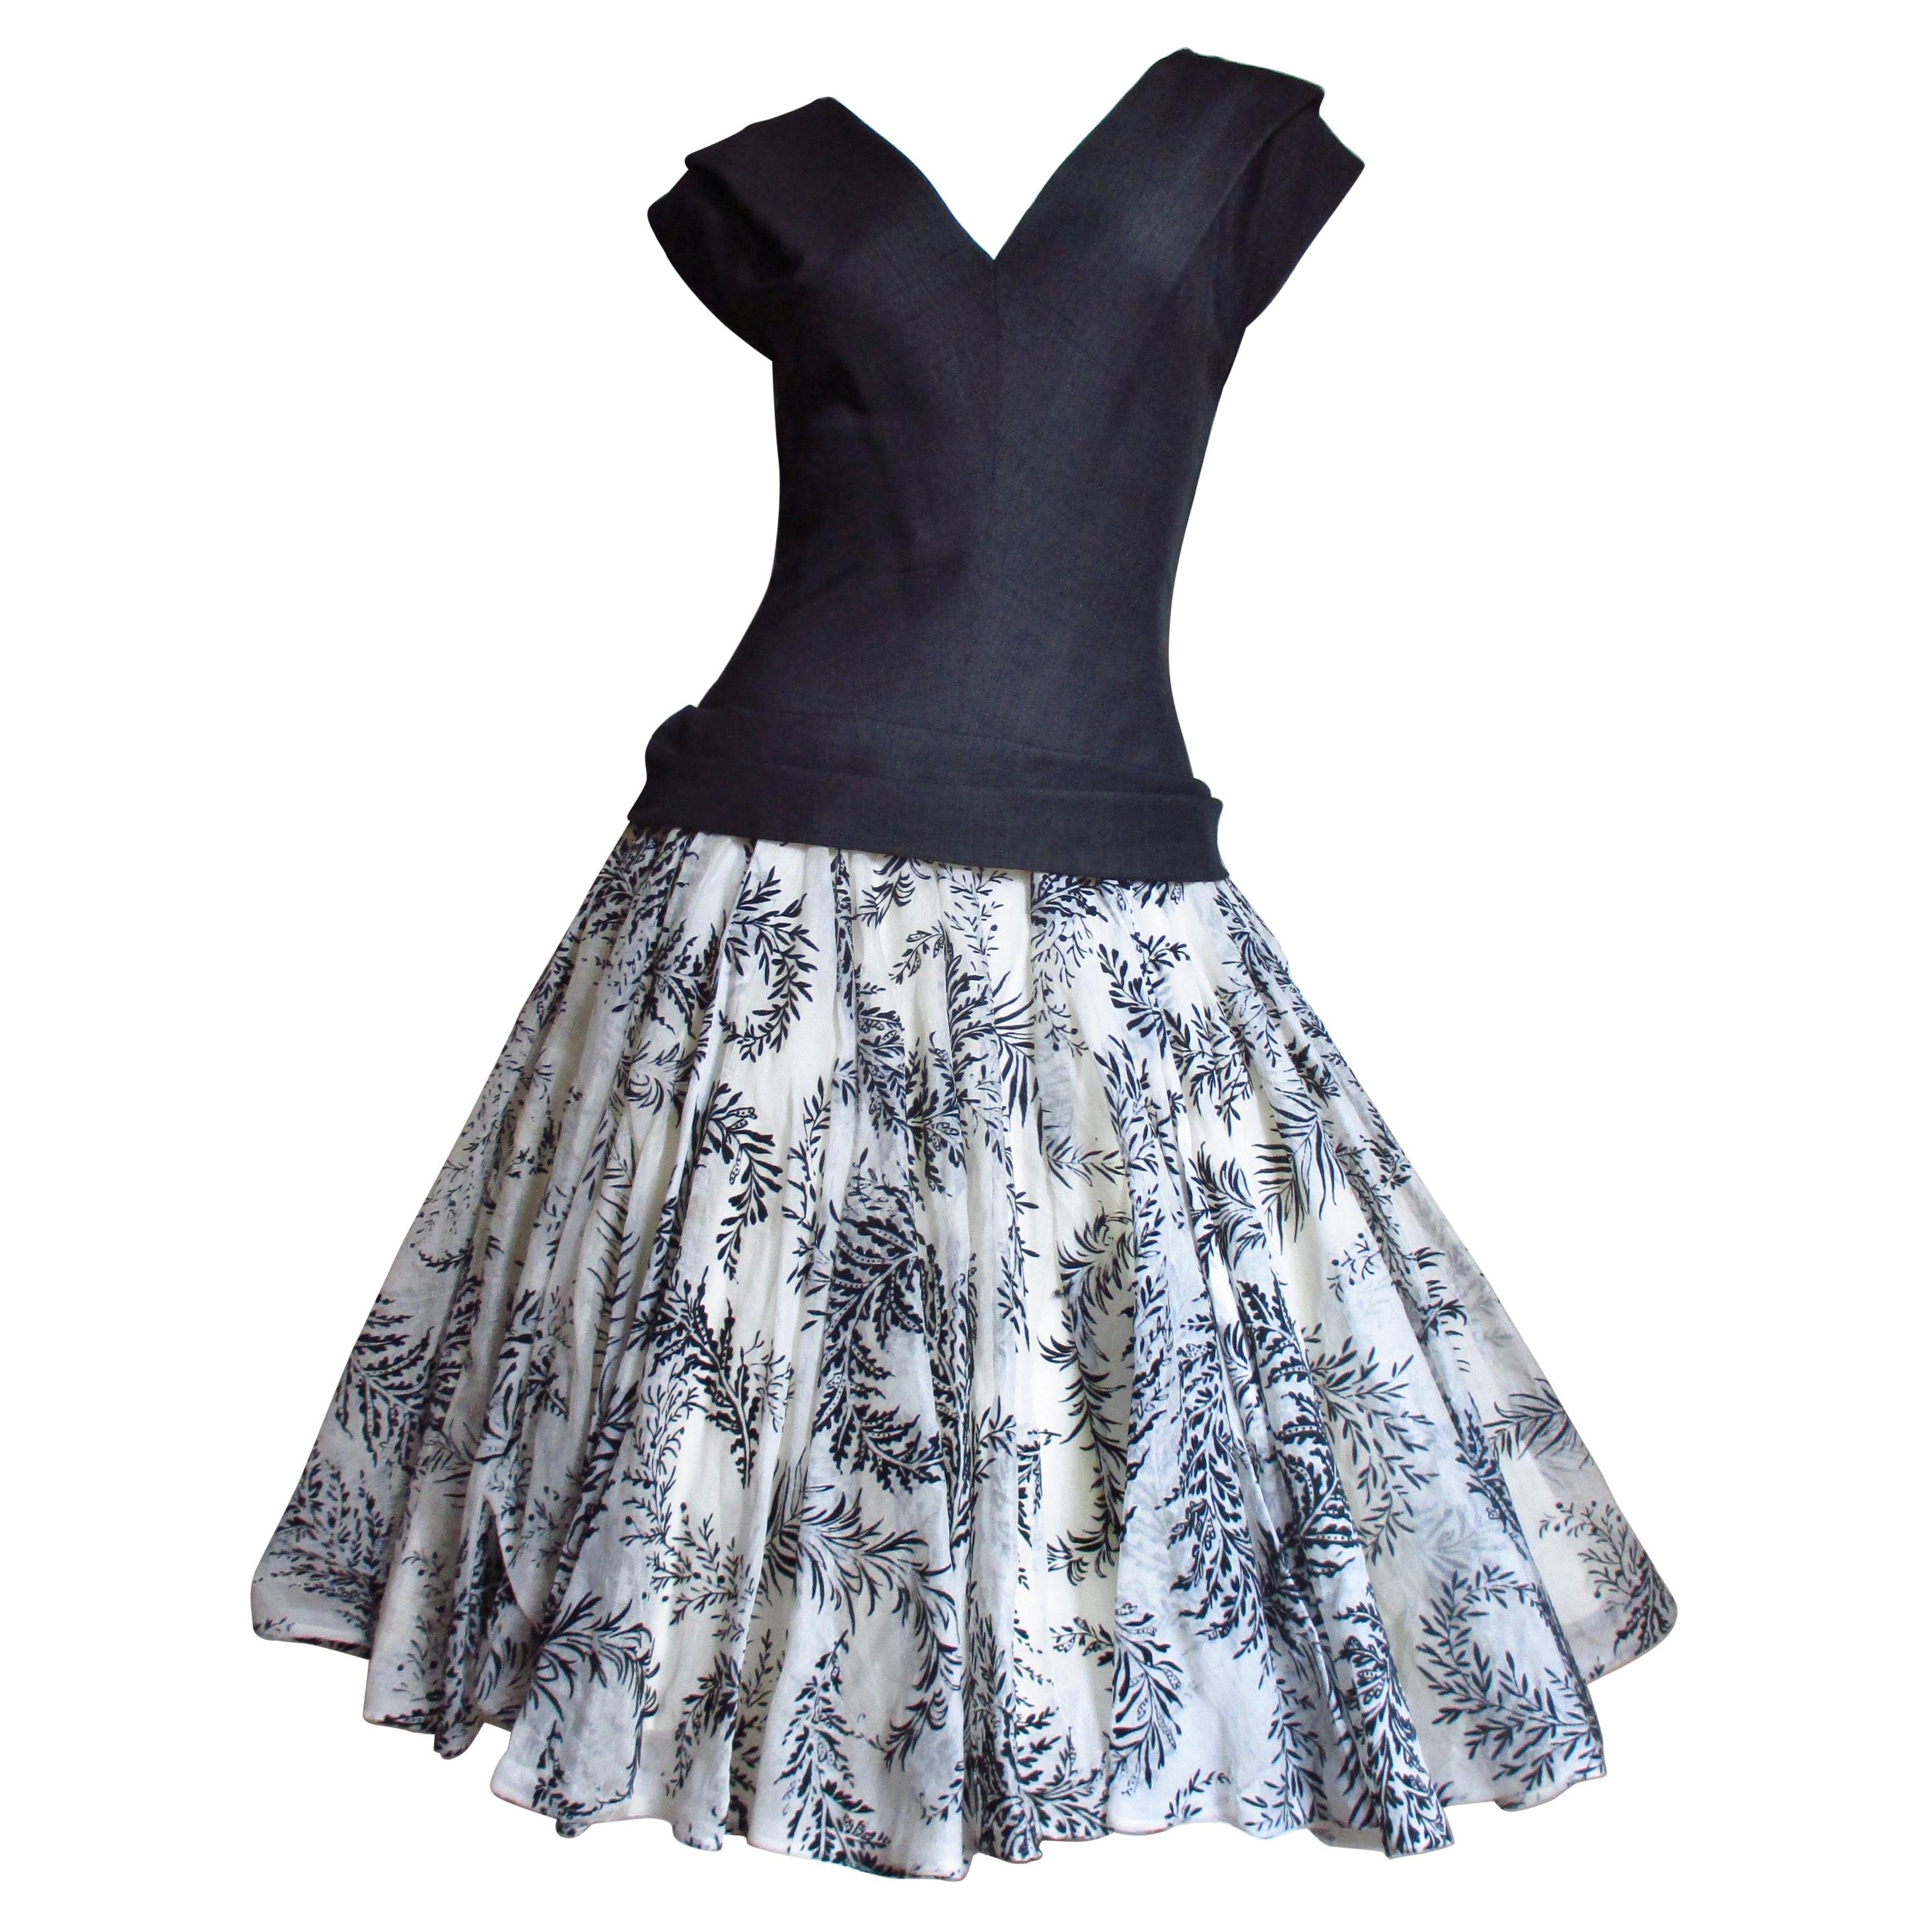 Werle 1950s Silk Dress with Full Skirt